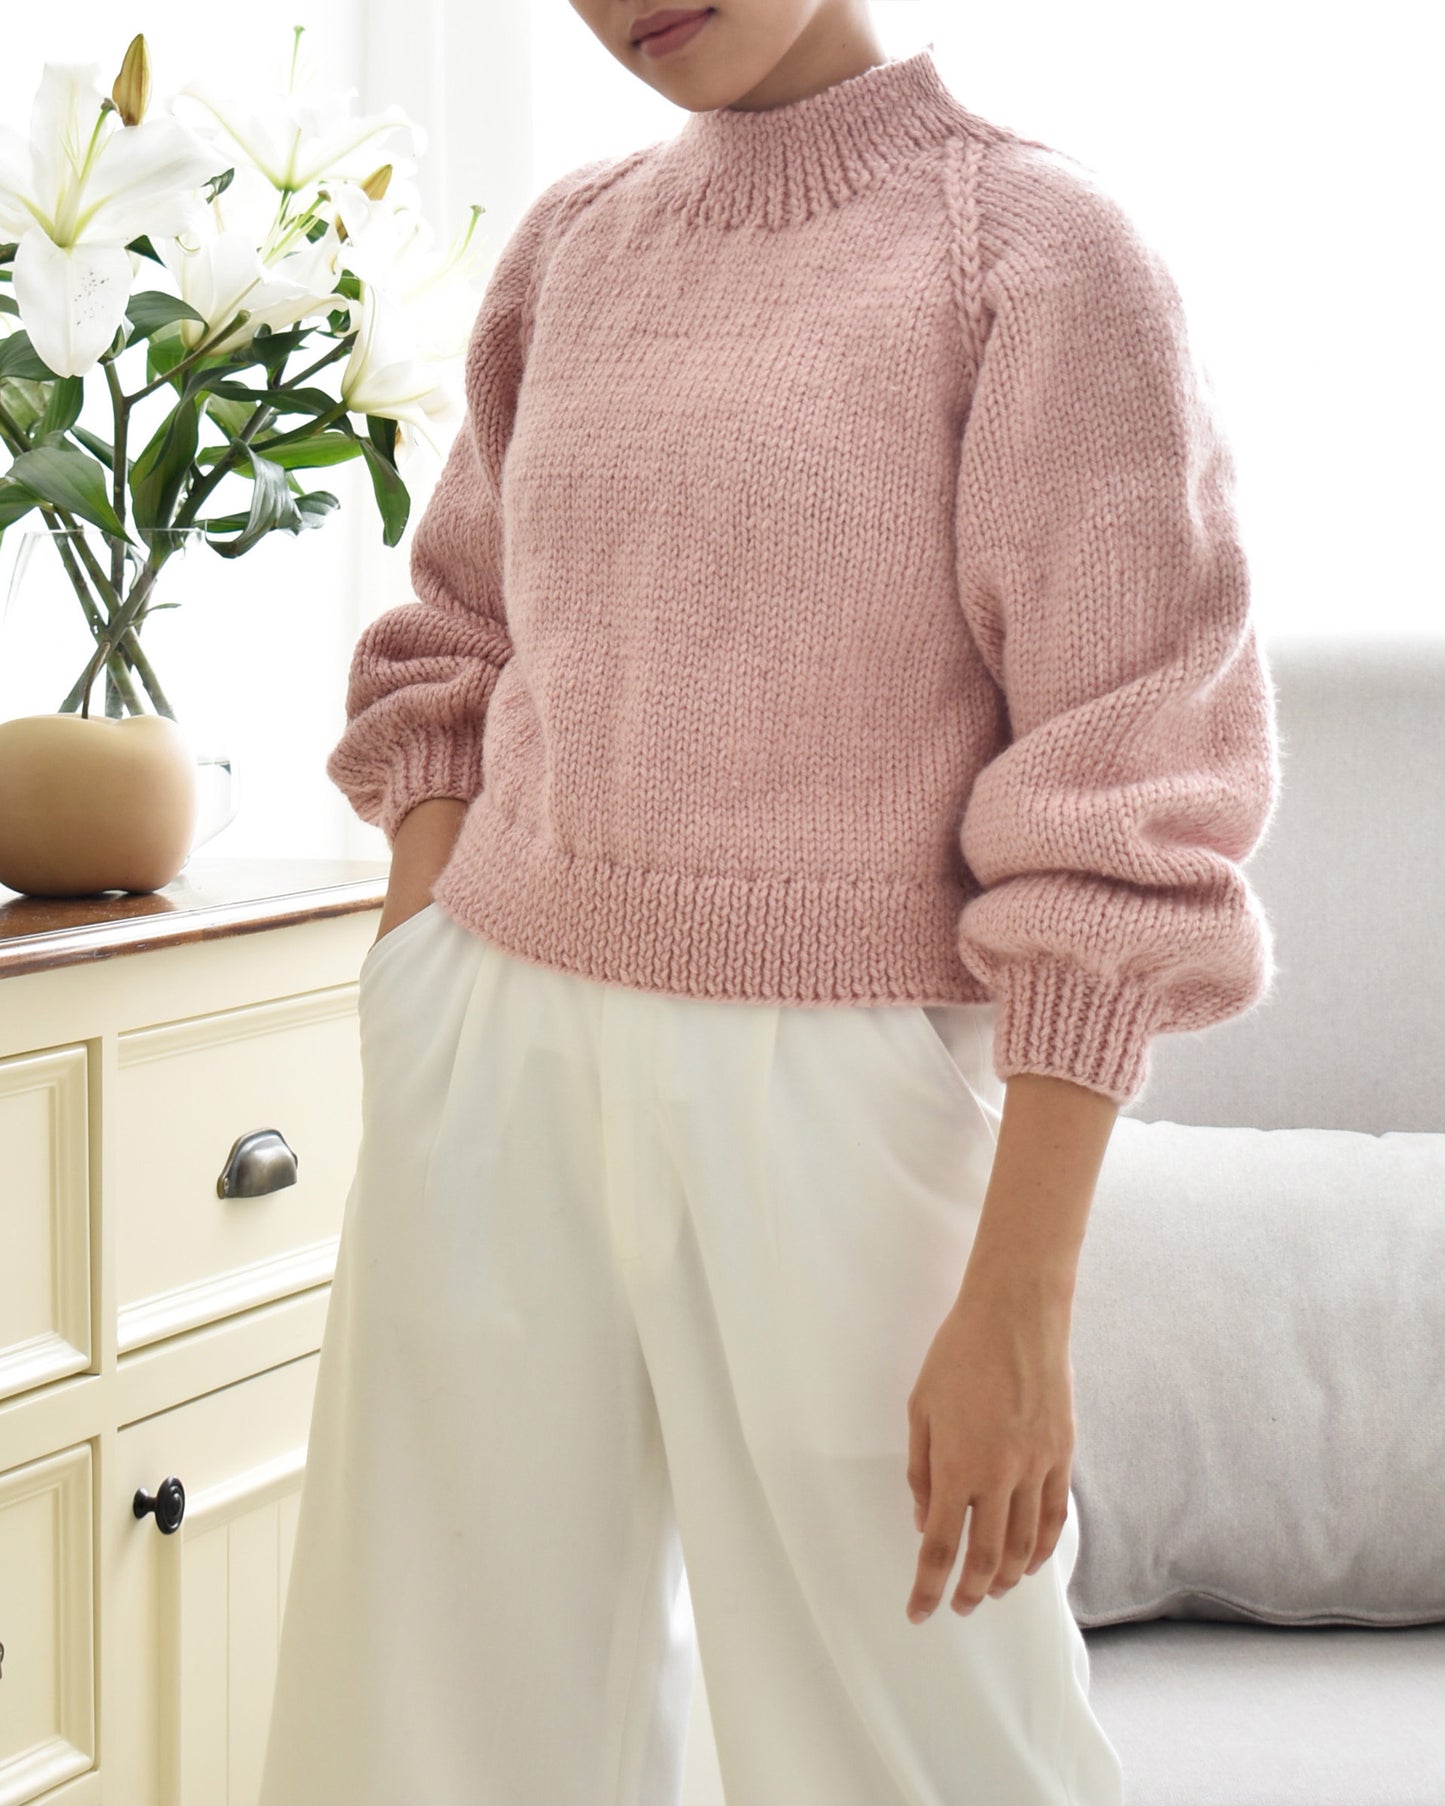 Sweater No.22 | Knitting raglan sweater pattern